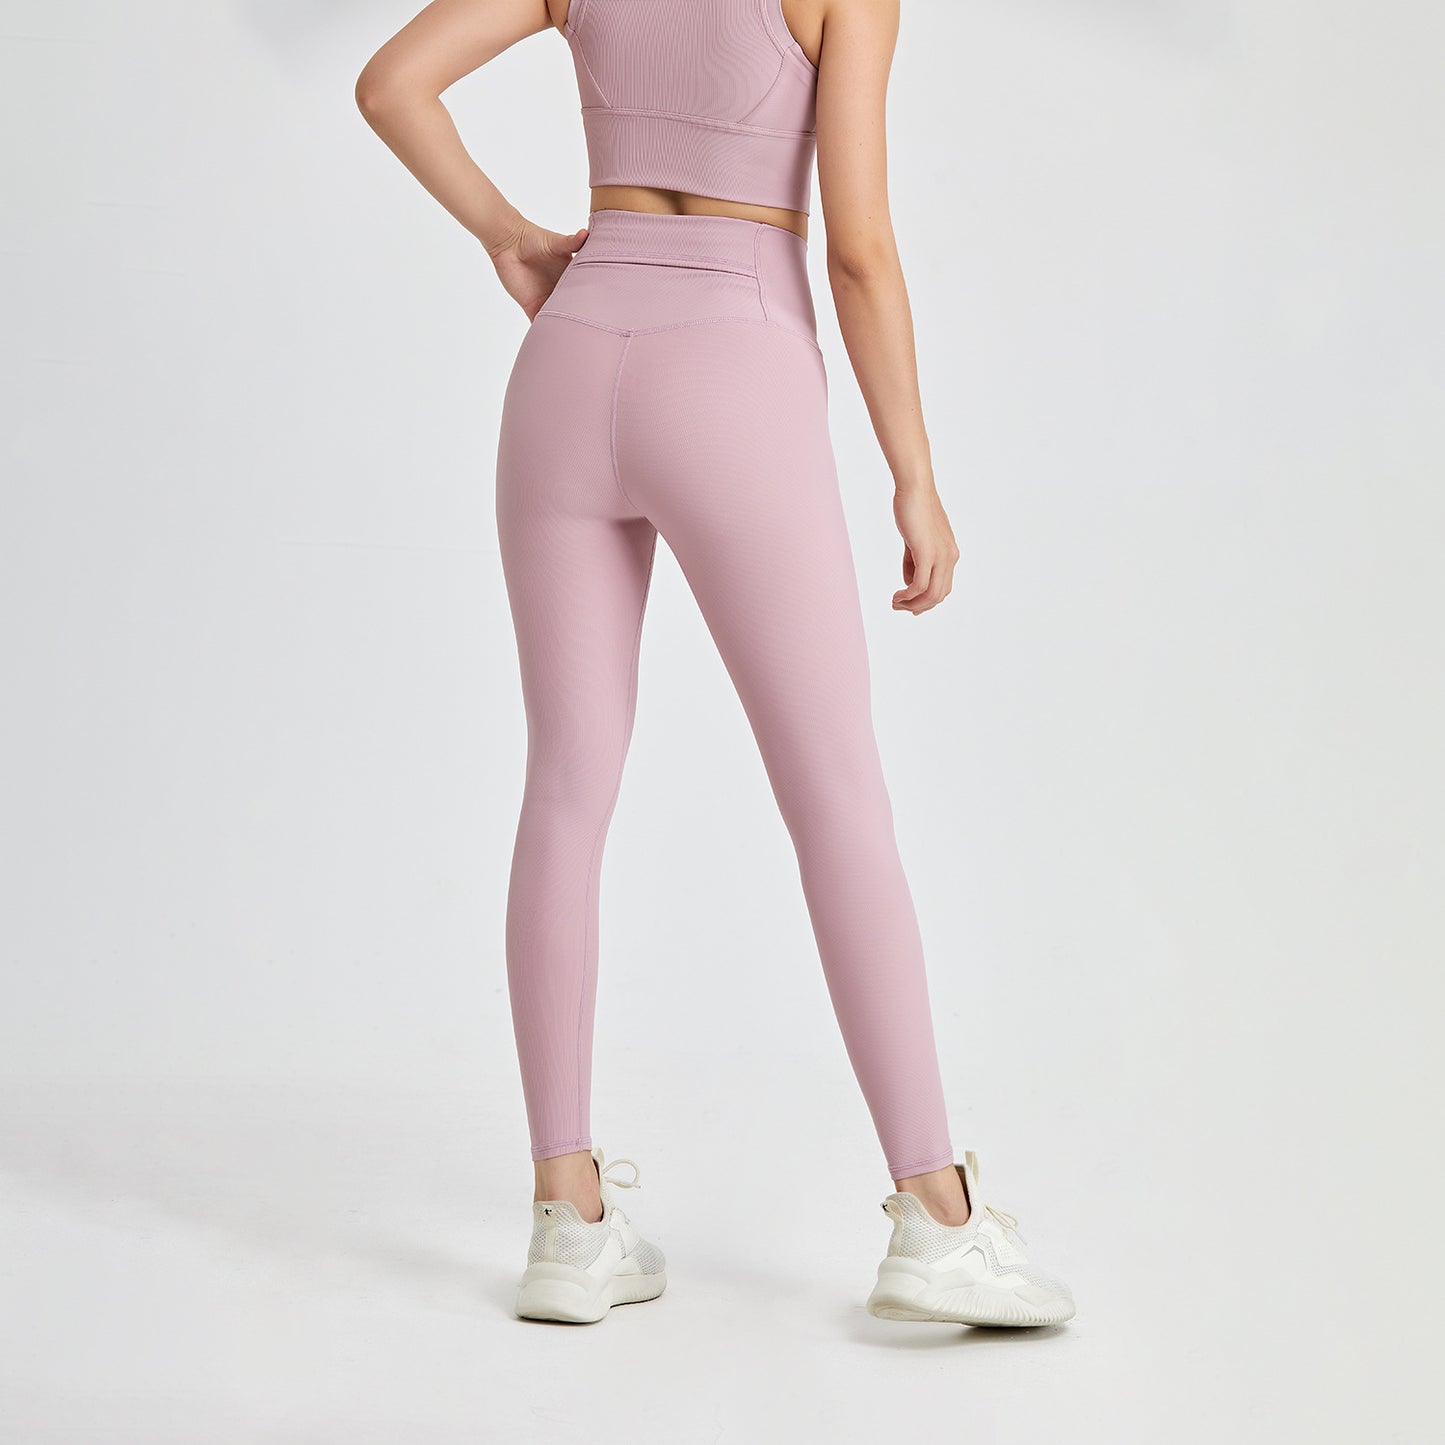 Women's Fashion Workout Exercise Pants